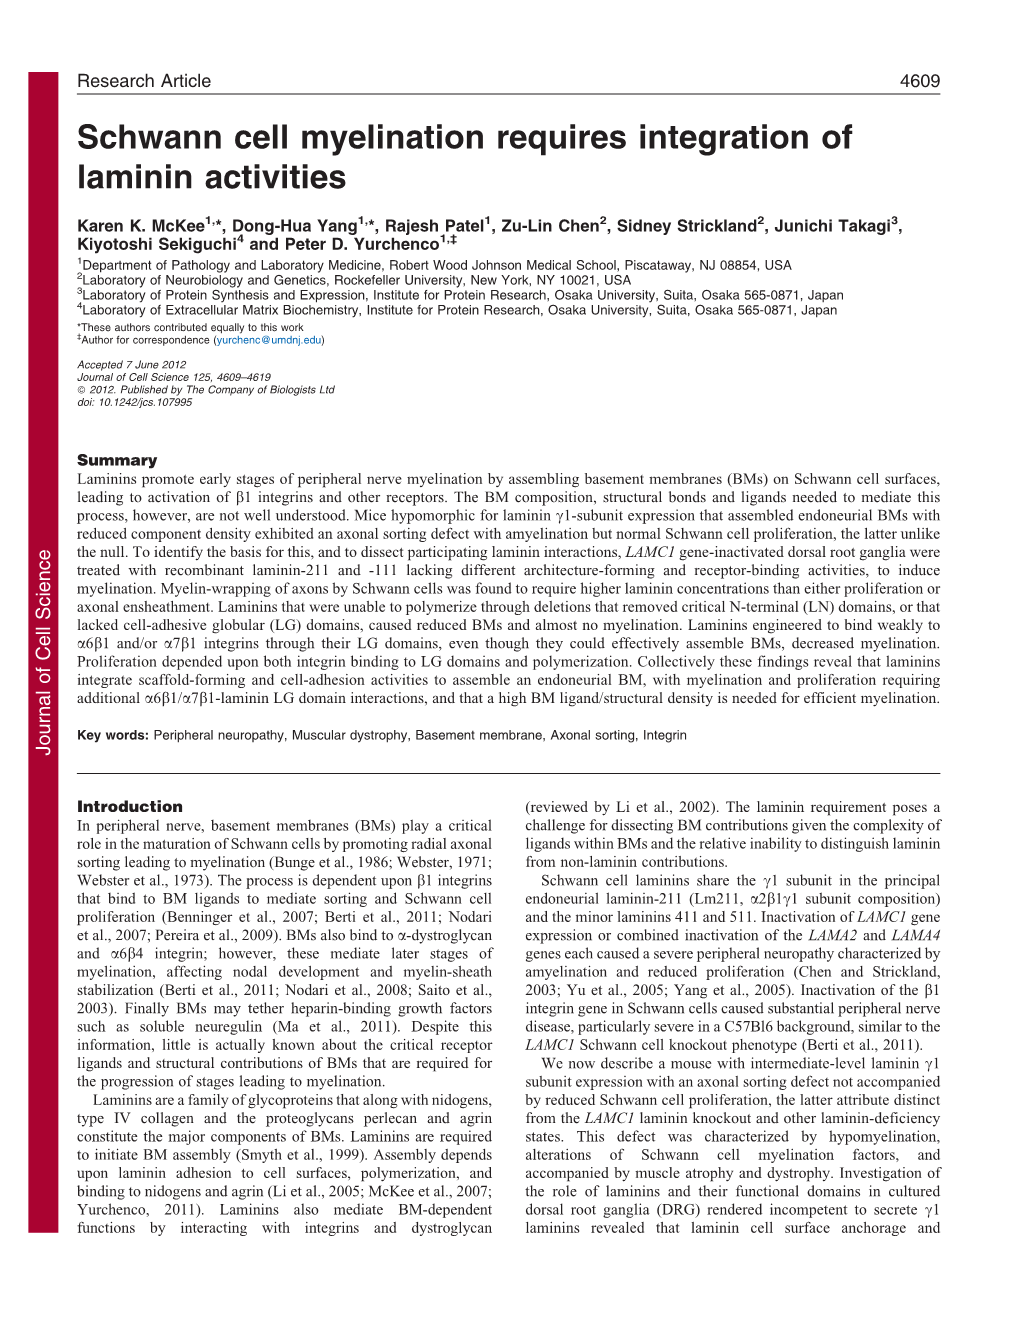 Schwann Cell Myelination Requires Integration of Laminin Activities